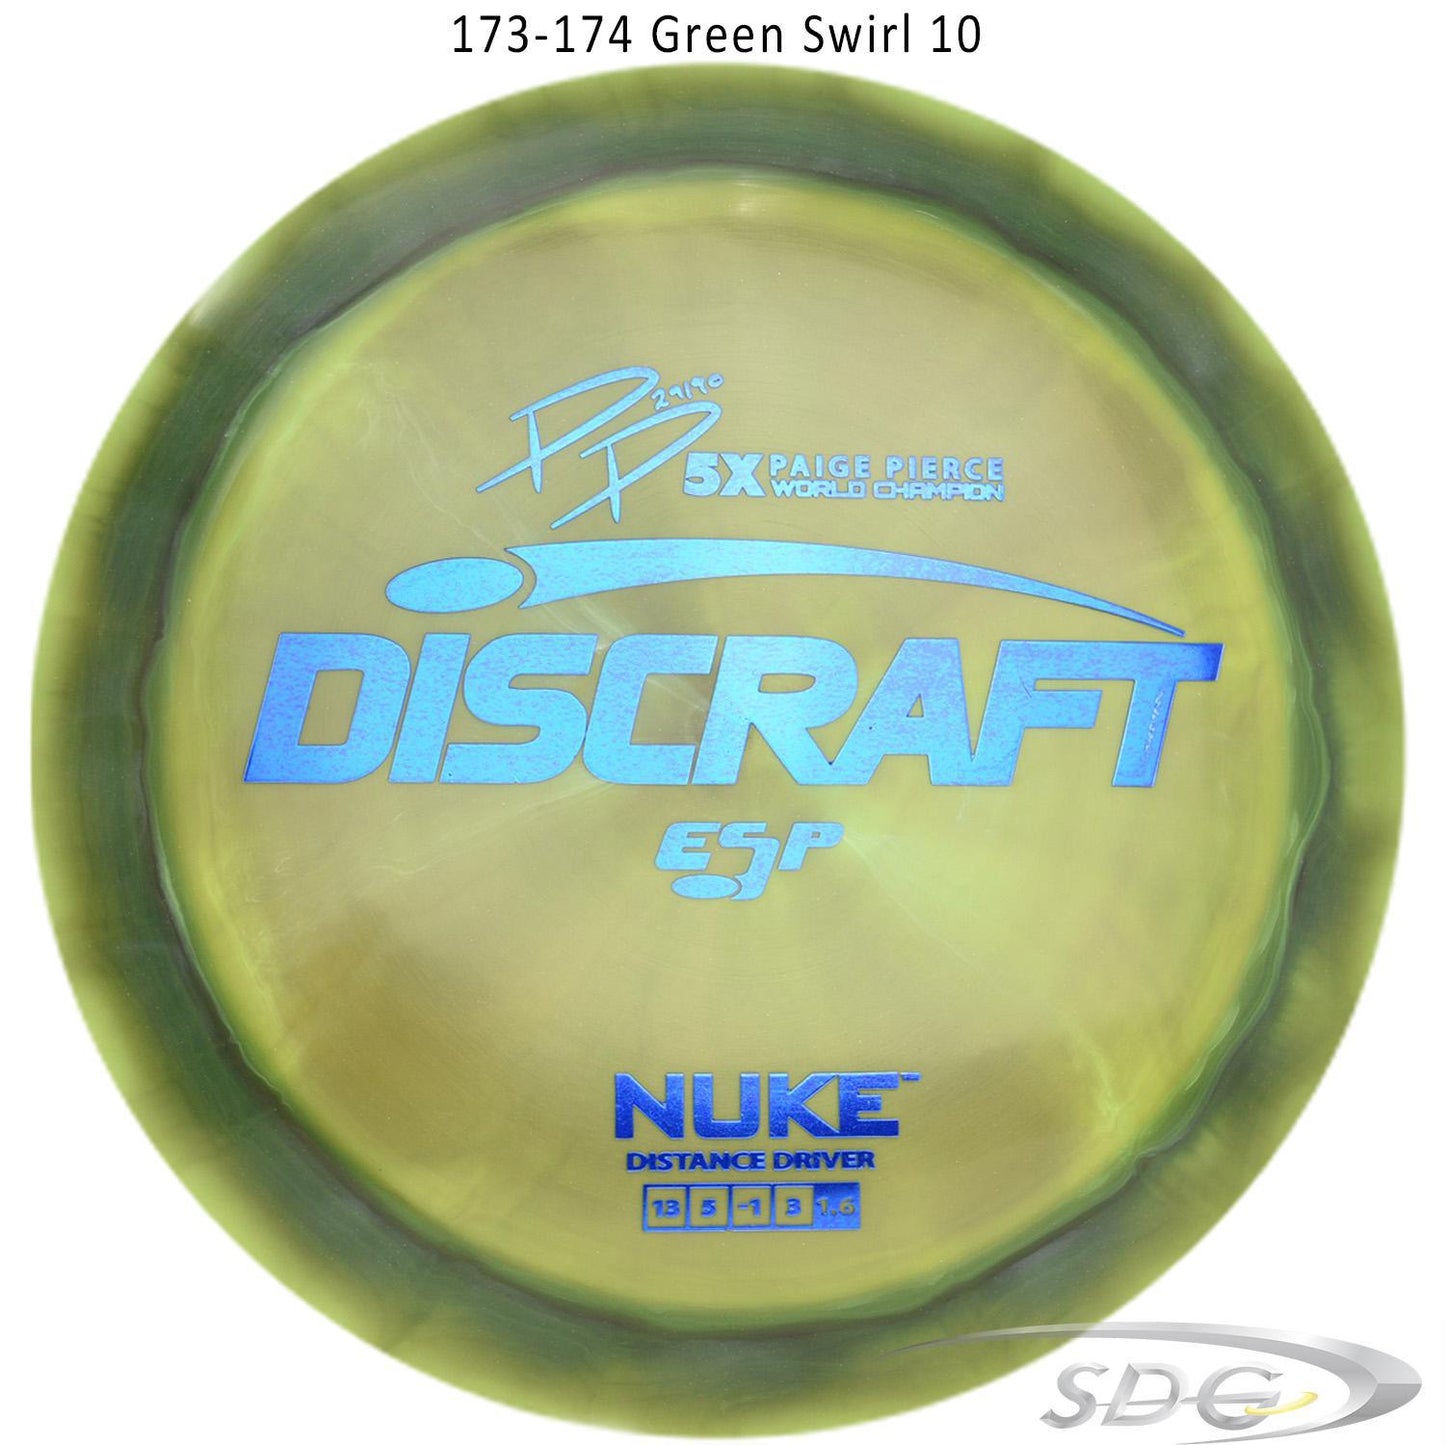 discraft-esp-nuke-paige-pierce-signature-disc-golf-distance-driver-176-173-weights 173-174 Green Swirl 10 